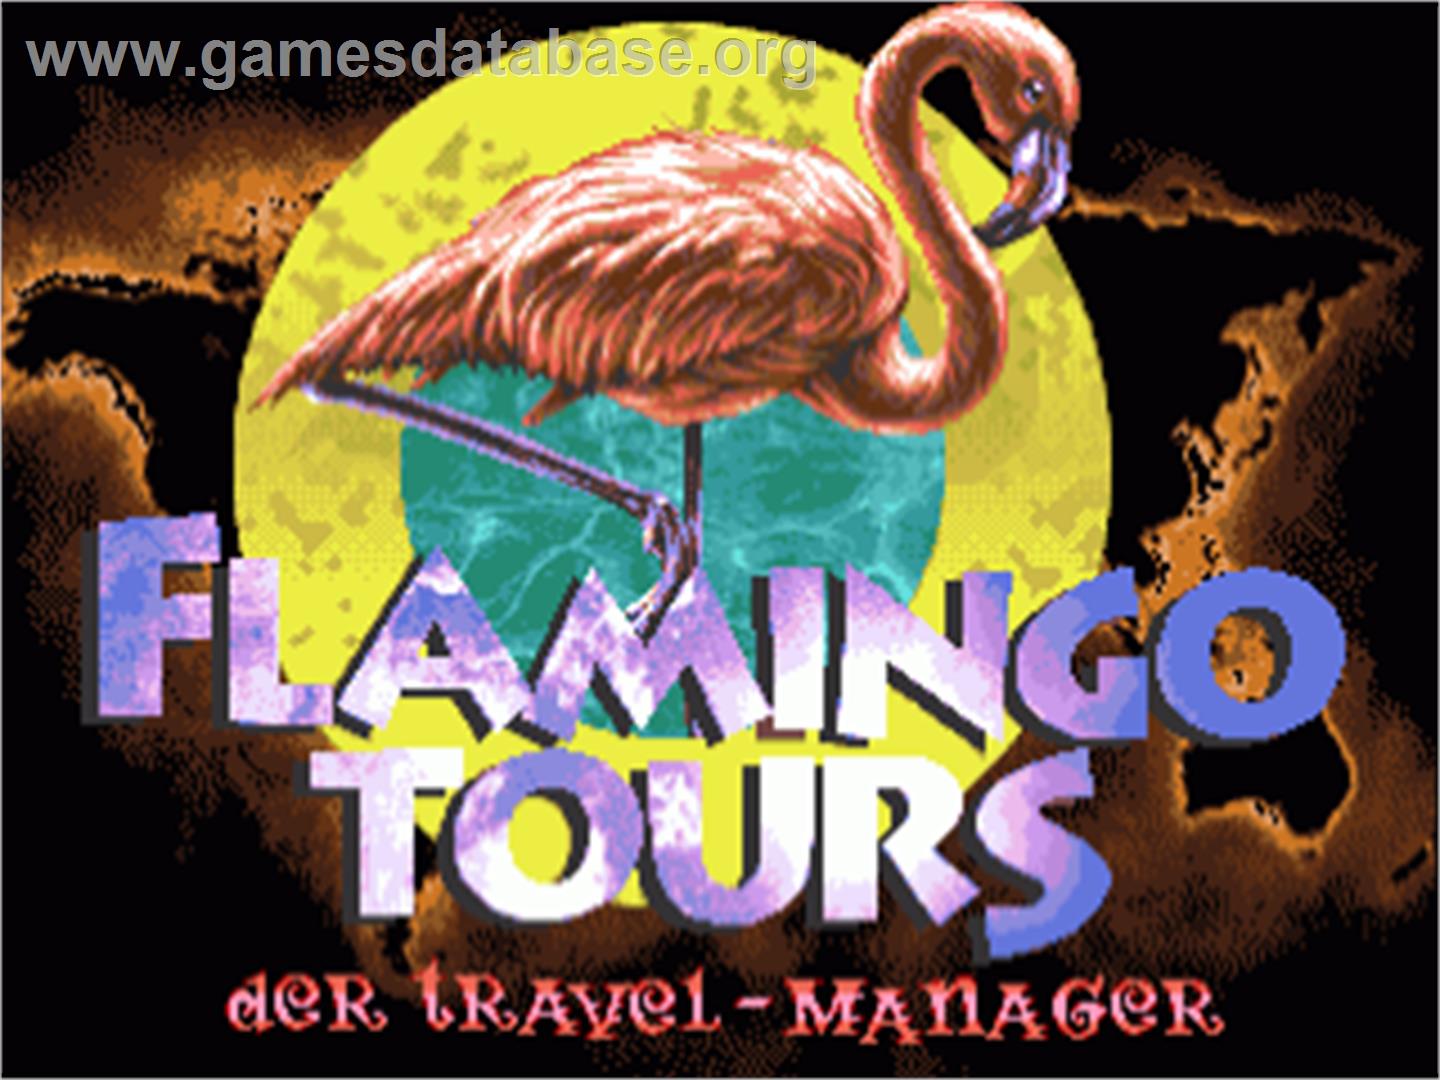 Flamingo Tours - Commodore Amiga - Artwork - Title Screen